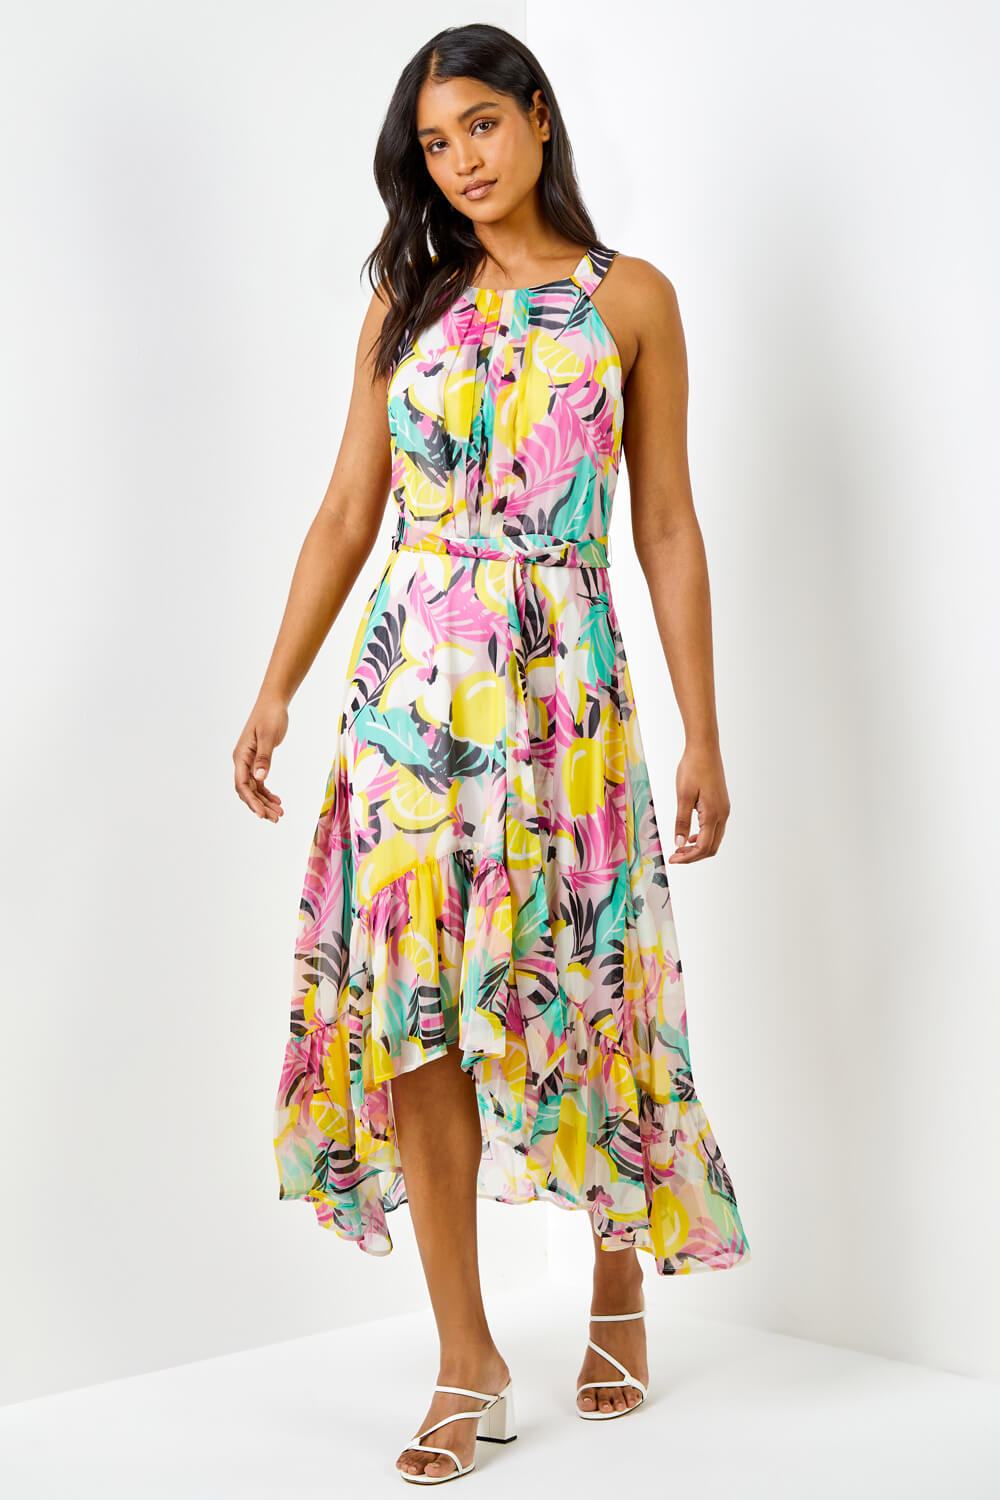 PINK Halter Neck Tropical Print Dress, Image 3 of 5